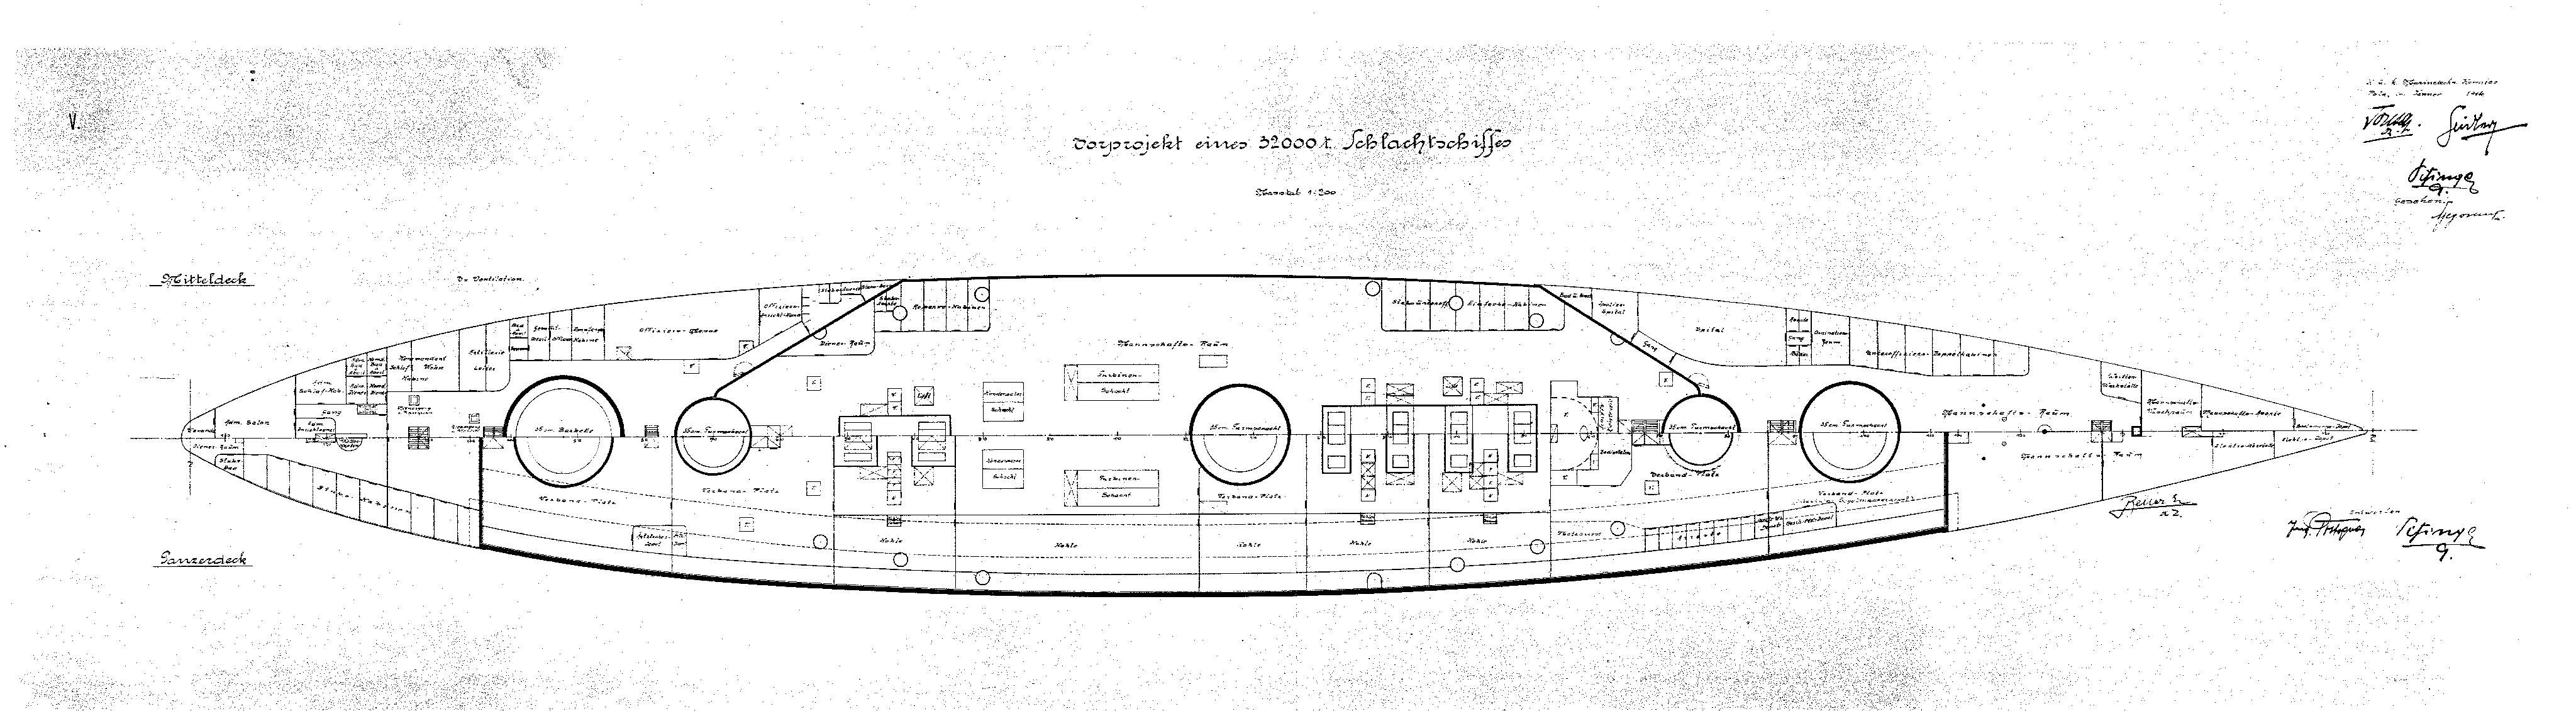 S.M.S. Viribus Unitis - Austro-Hungarian Battleship - Preliminary ...